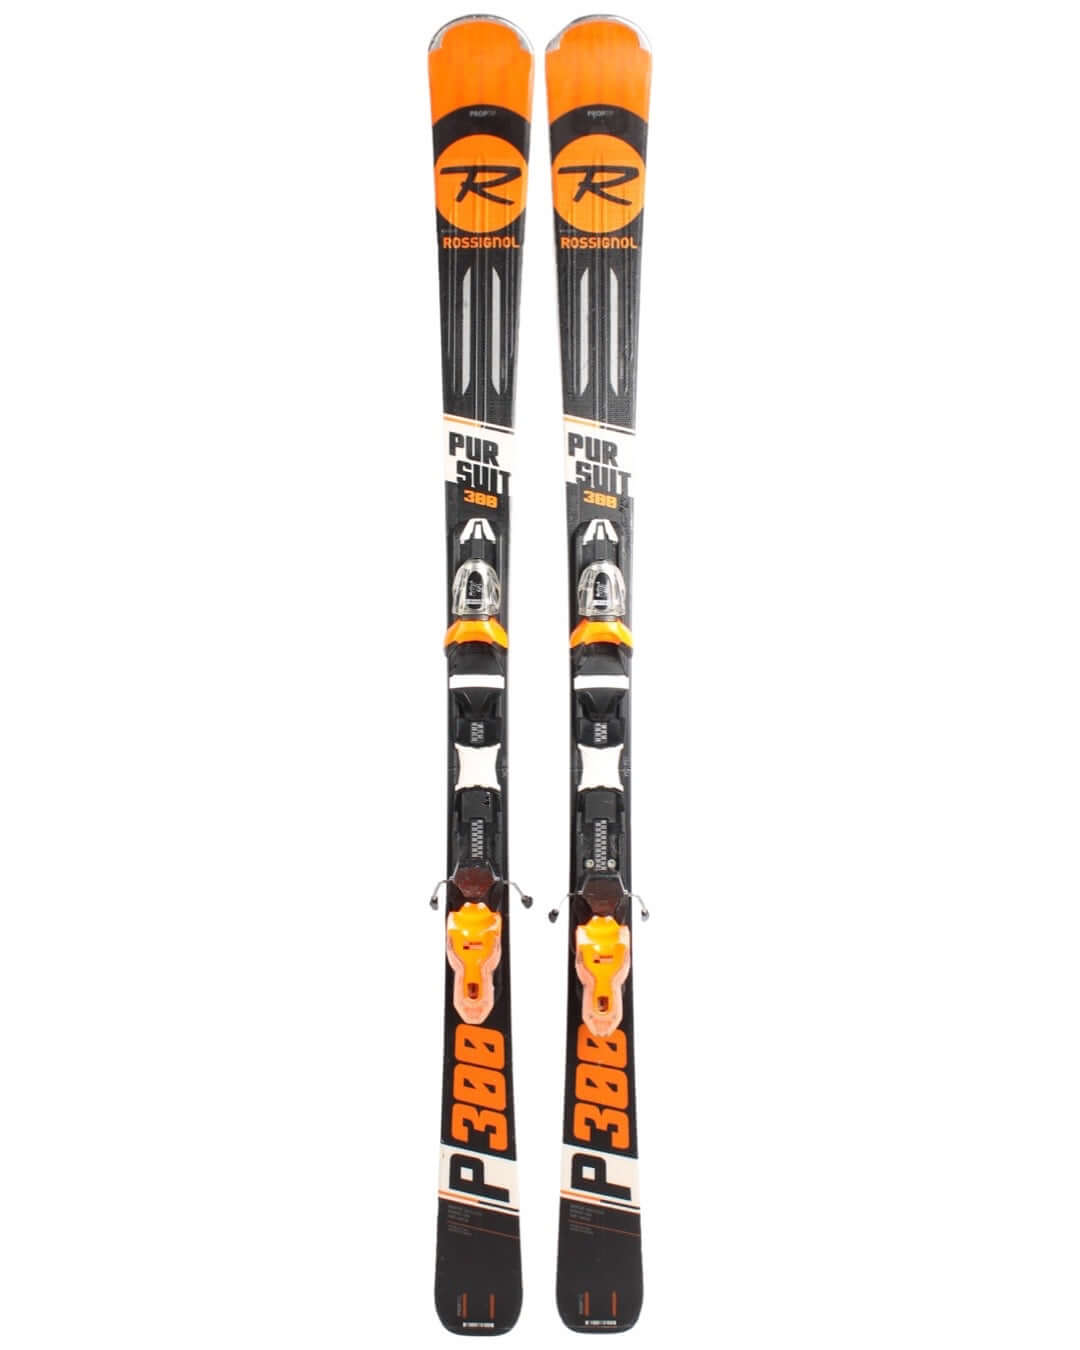 Ski - Rossignol Pursuit 300 - 1799 kr